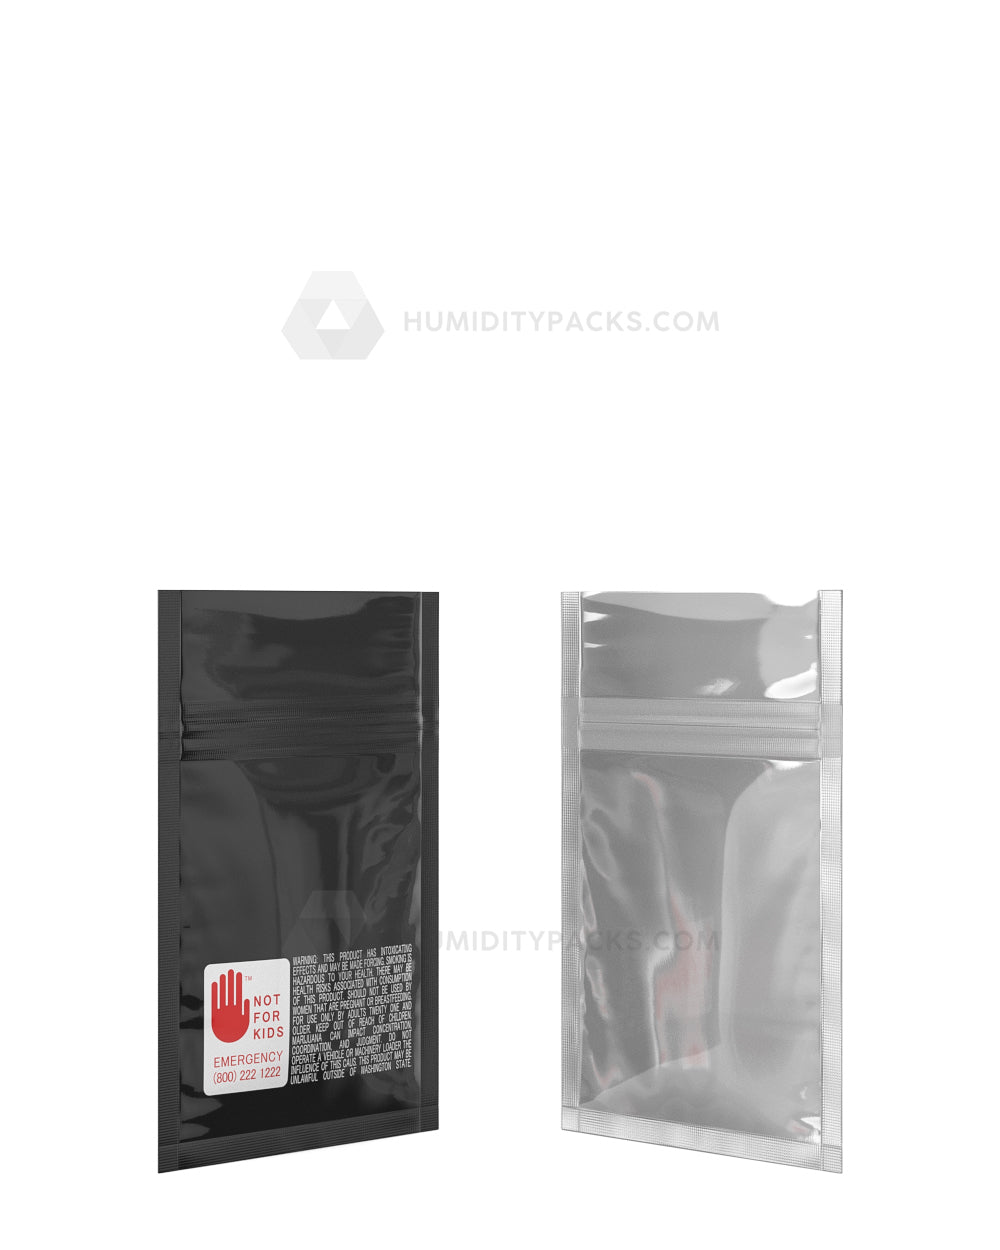 Glossy-Black 3" x 4.5" Vista Mylar Tamper Evident Bags for WA State (1 gram) 1000/Box Humidity Packs - 2